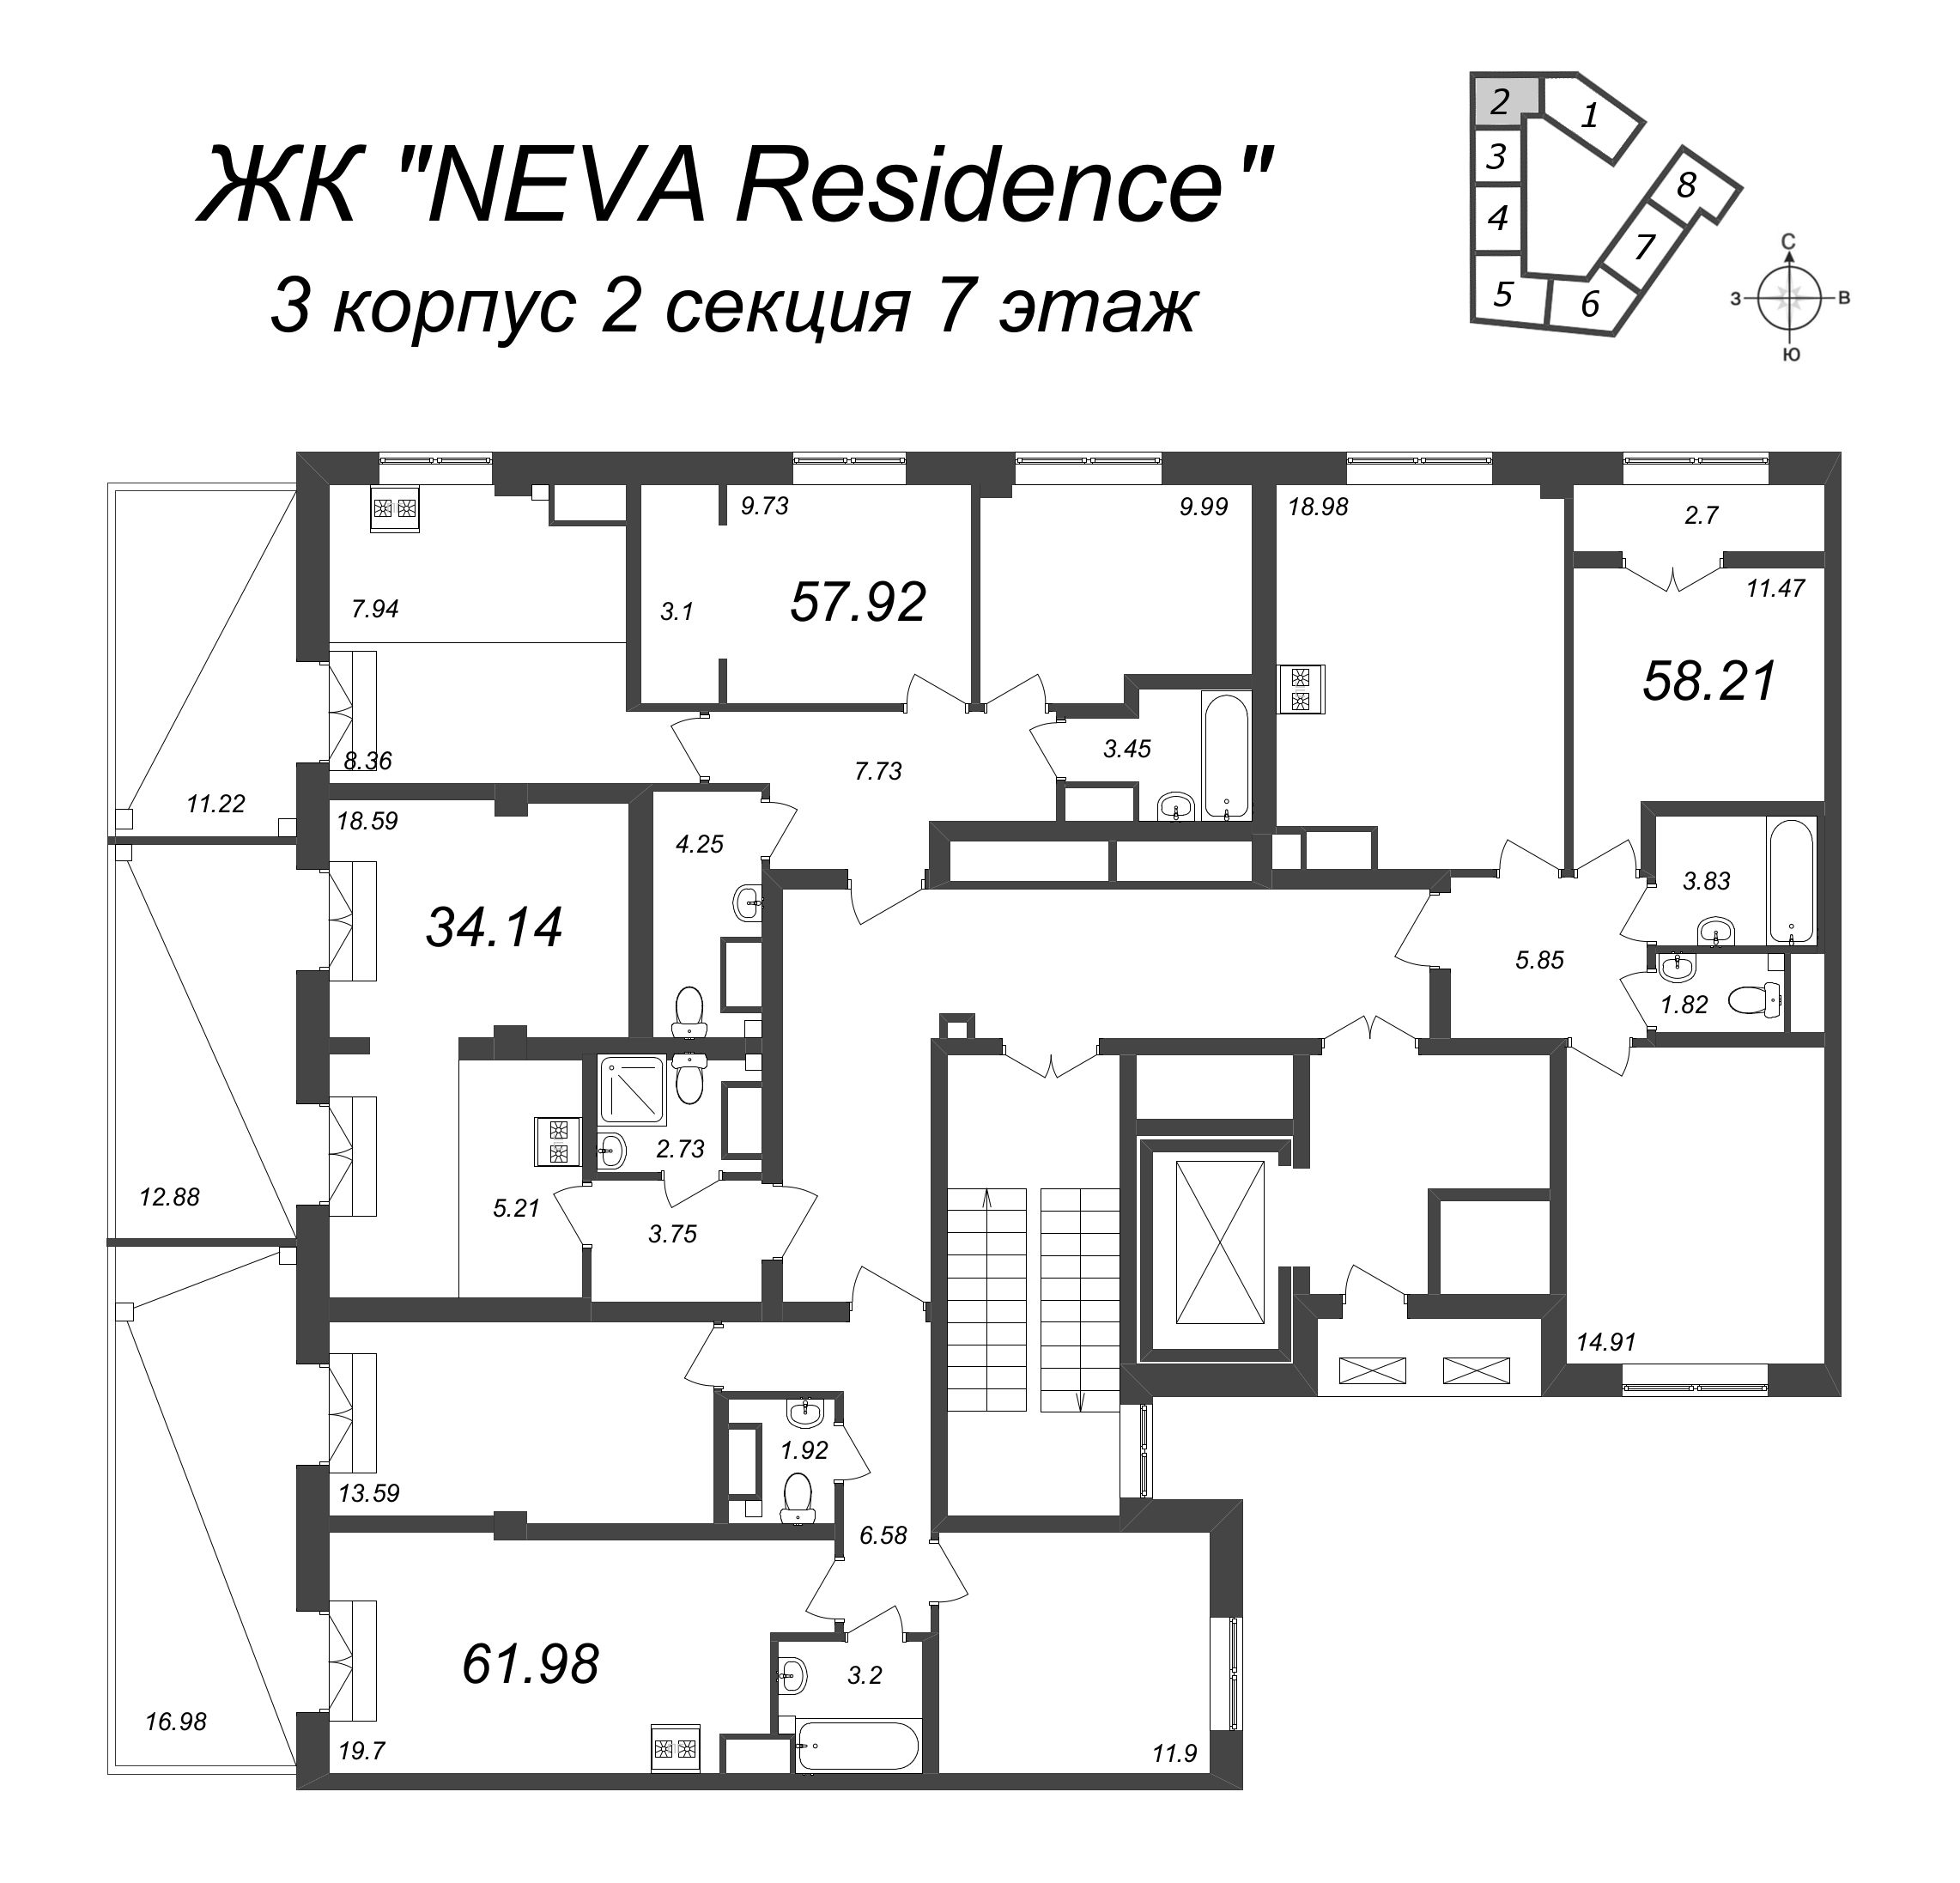 3-комнатная (Евро) квартира, 58.21 м² - планировка этажа